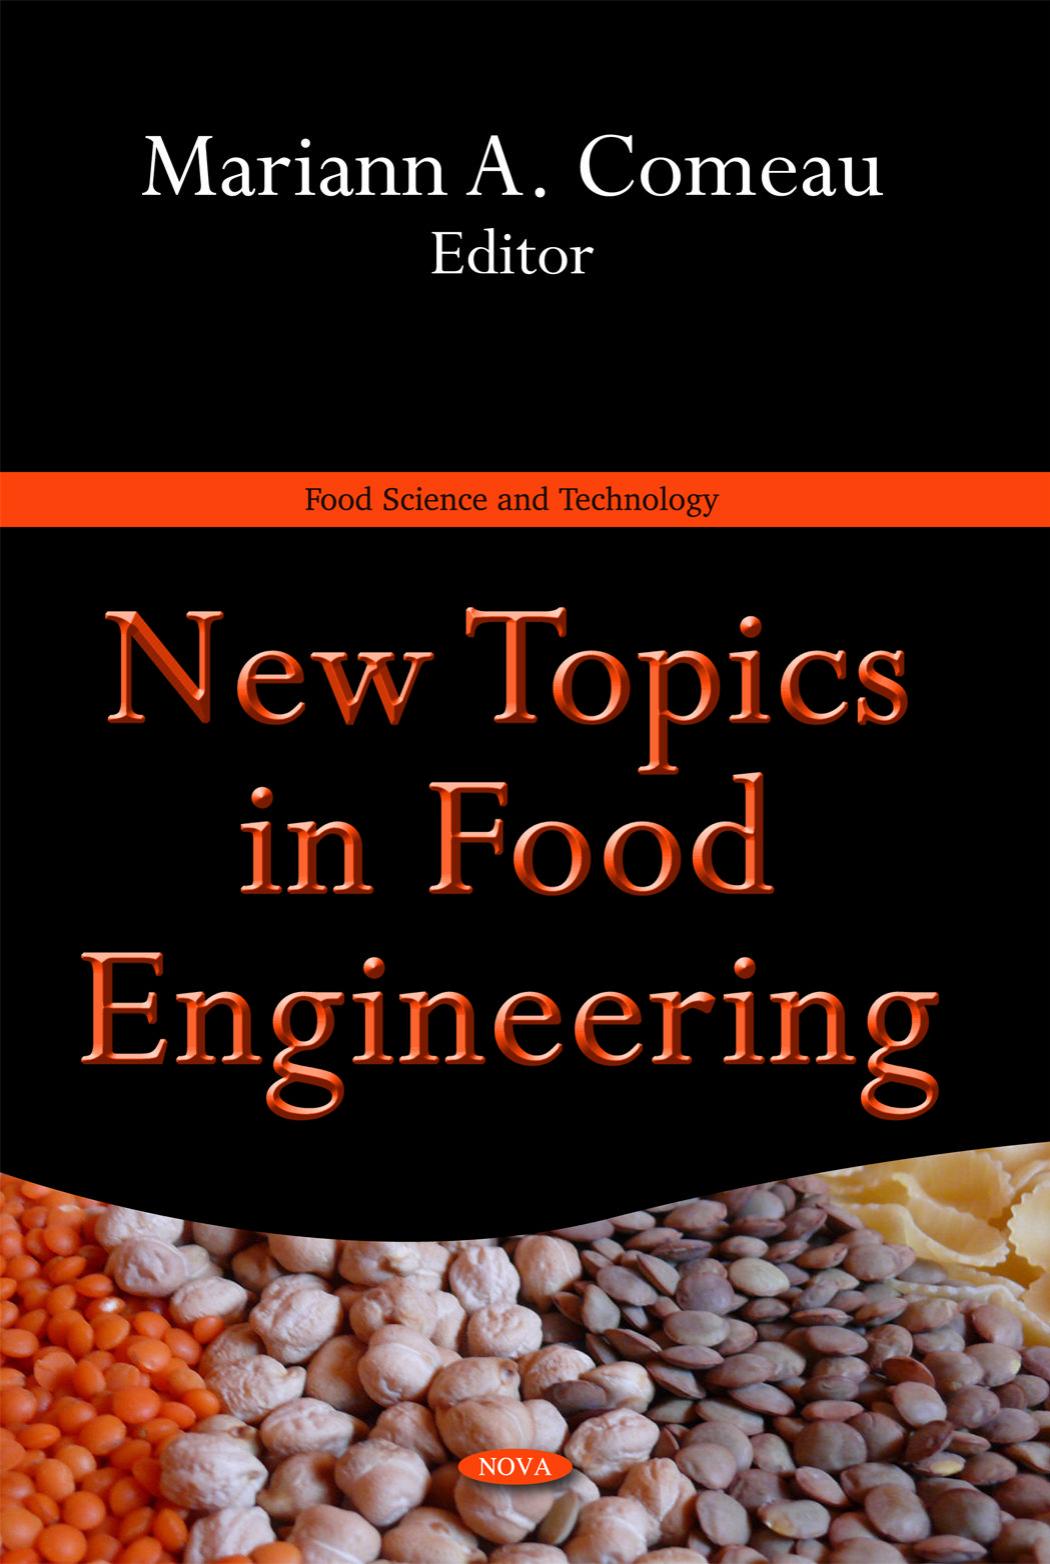 New topics in food engineering